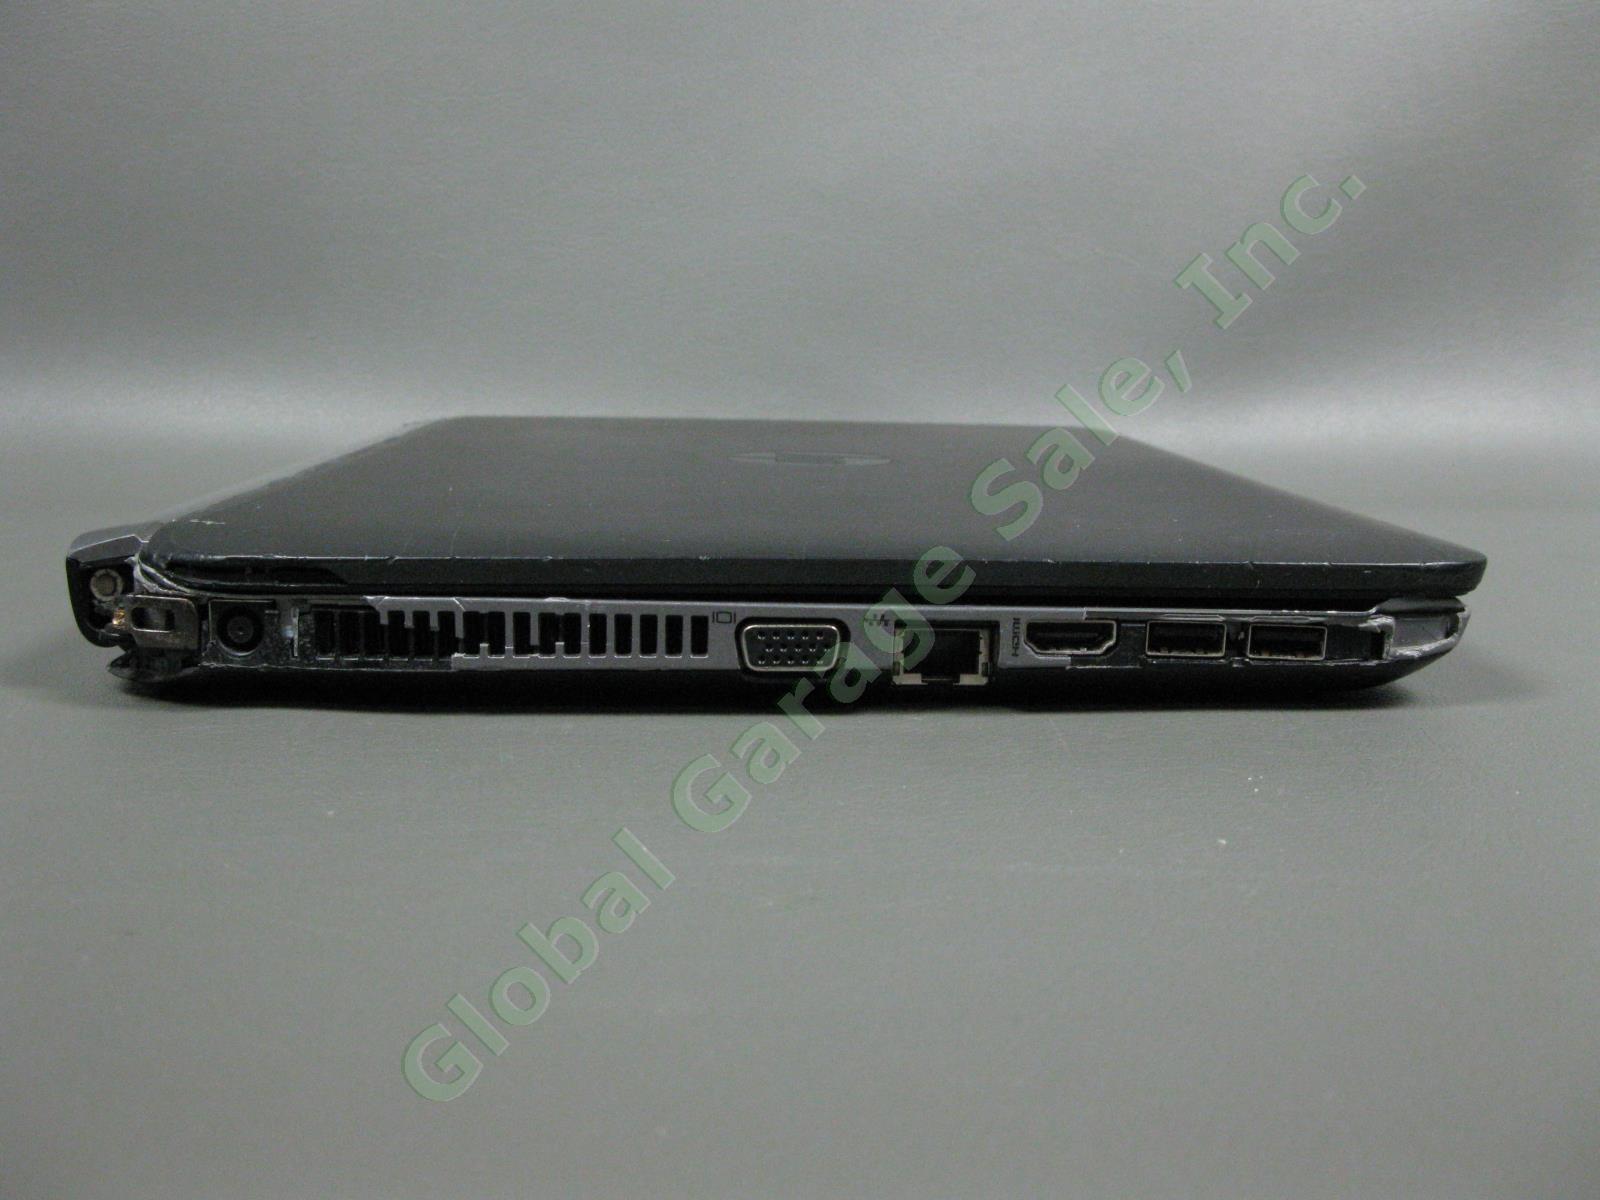 HP ProBook Black Laptop 440 G2 i5-5200U 2.20GHz 4GB RAM 460GB HD Windows 10 Pro 5